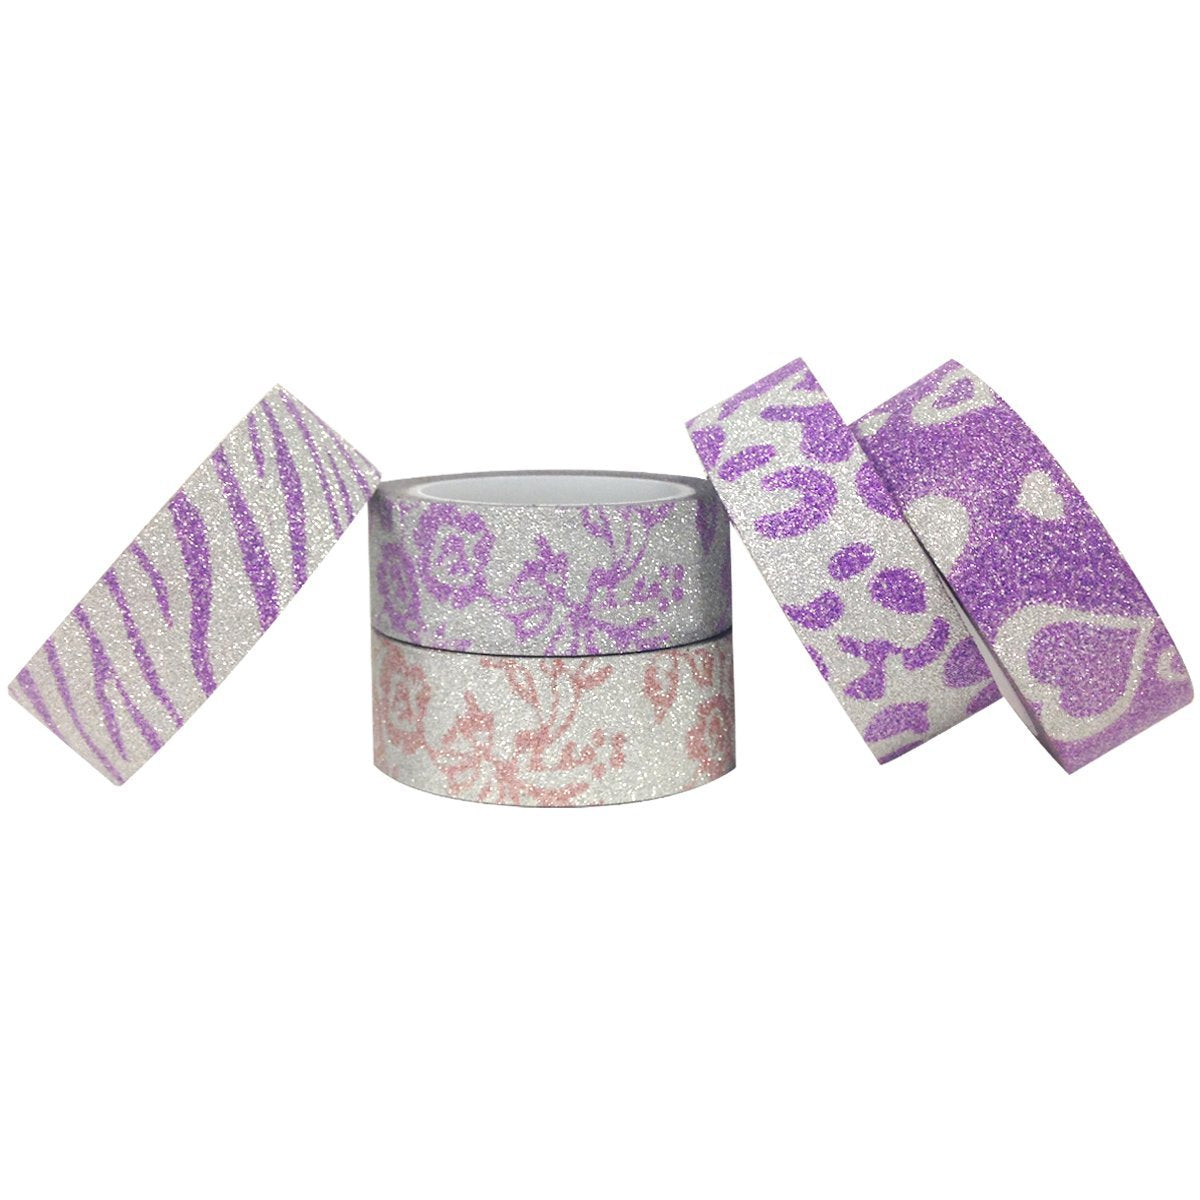 Wrapables Japanese Washi Masking Tape, Glitter Collection (Set of 6)